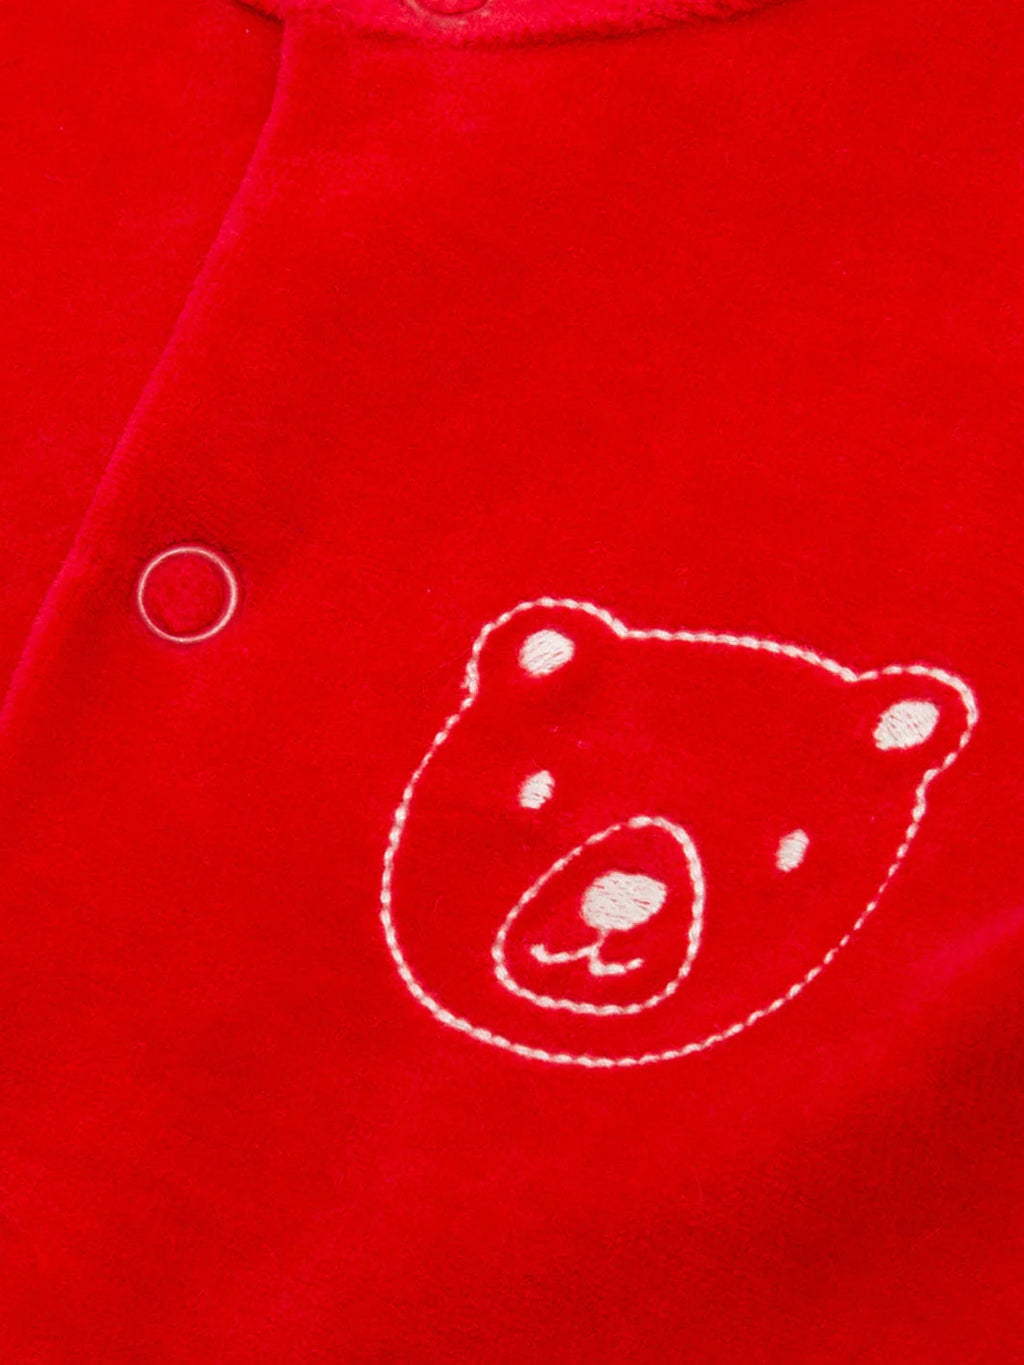 Kite Clothing Red Mr Bear Velvety Unisex Baby Sleepsuit | SALE